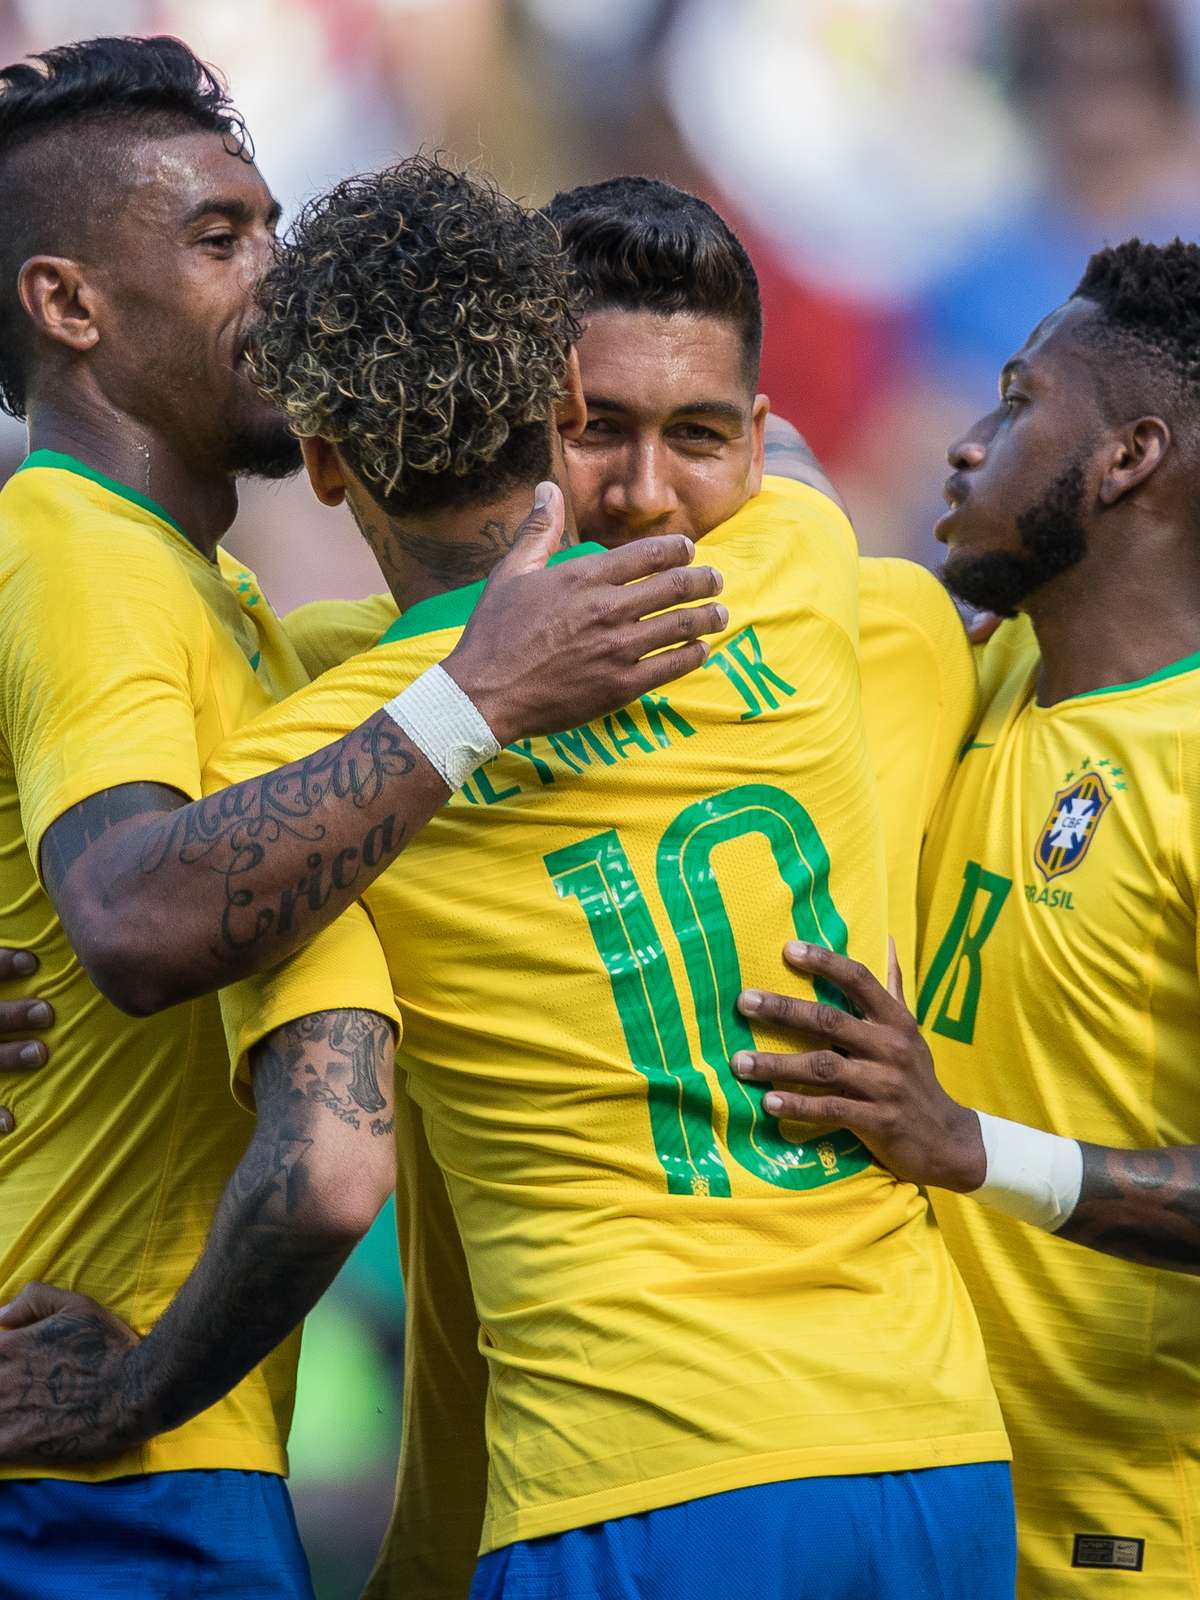 17 observações de Brasil 1 (2) x (4) 1 Croácia na Copa do Mundo do